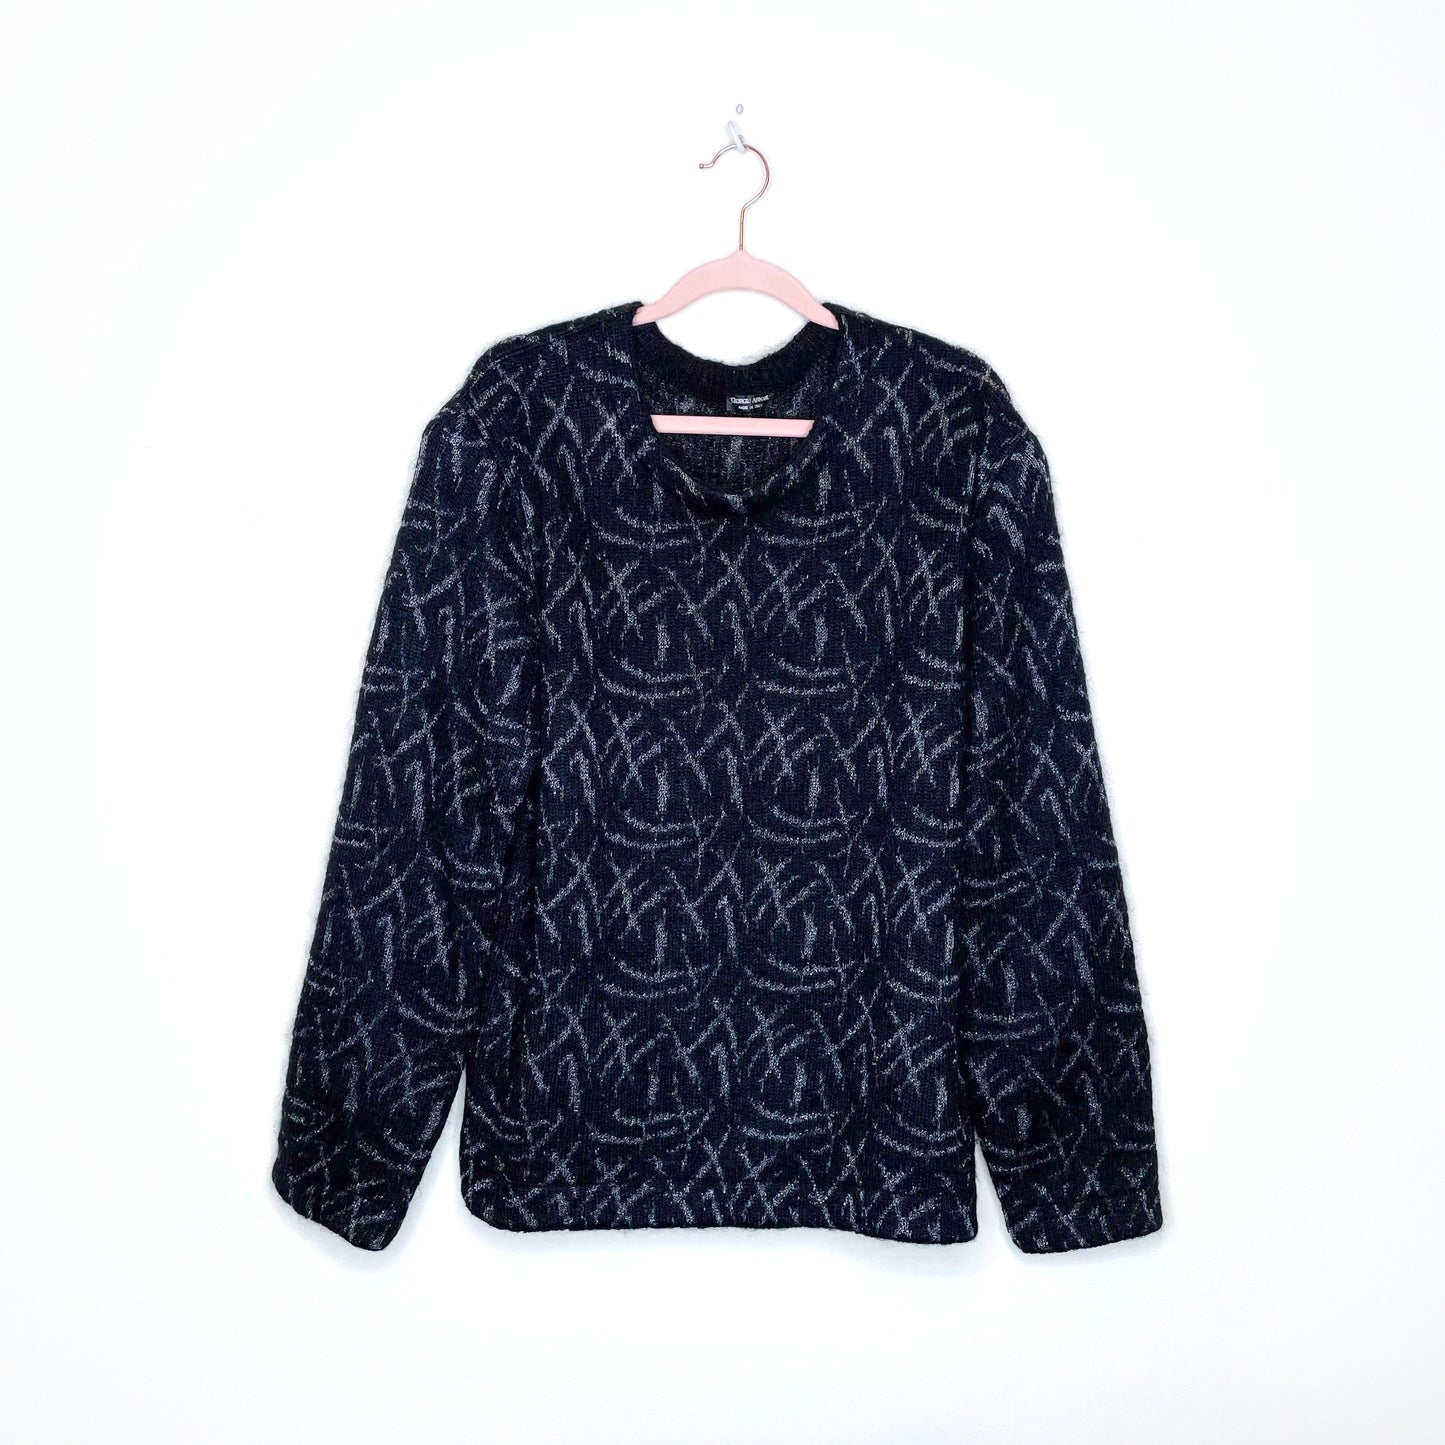 vintage giorgio armani black metallic sweater - size medium